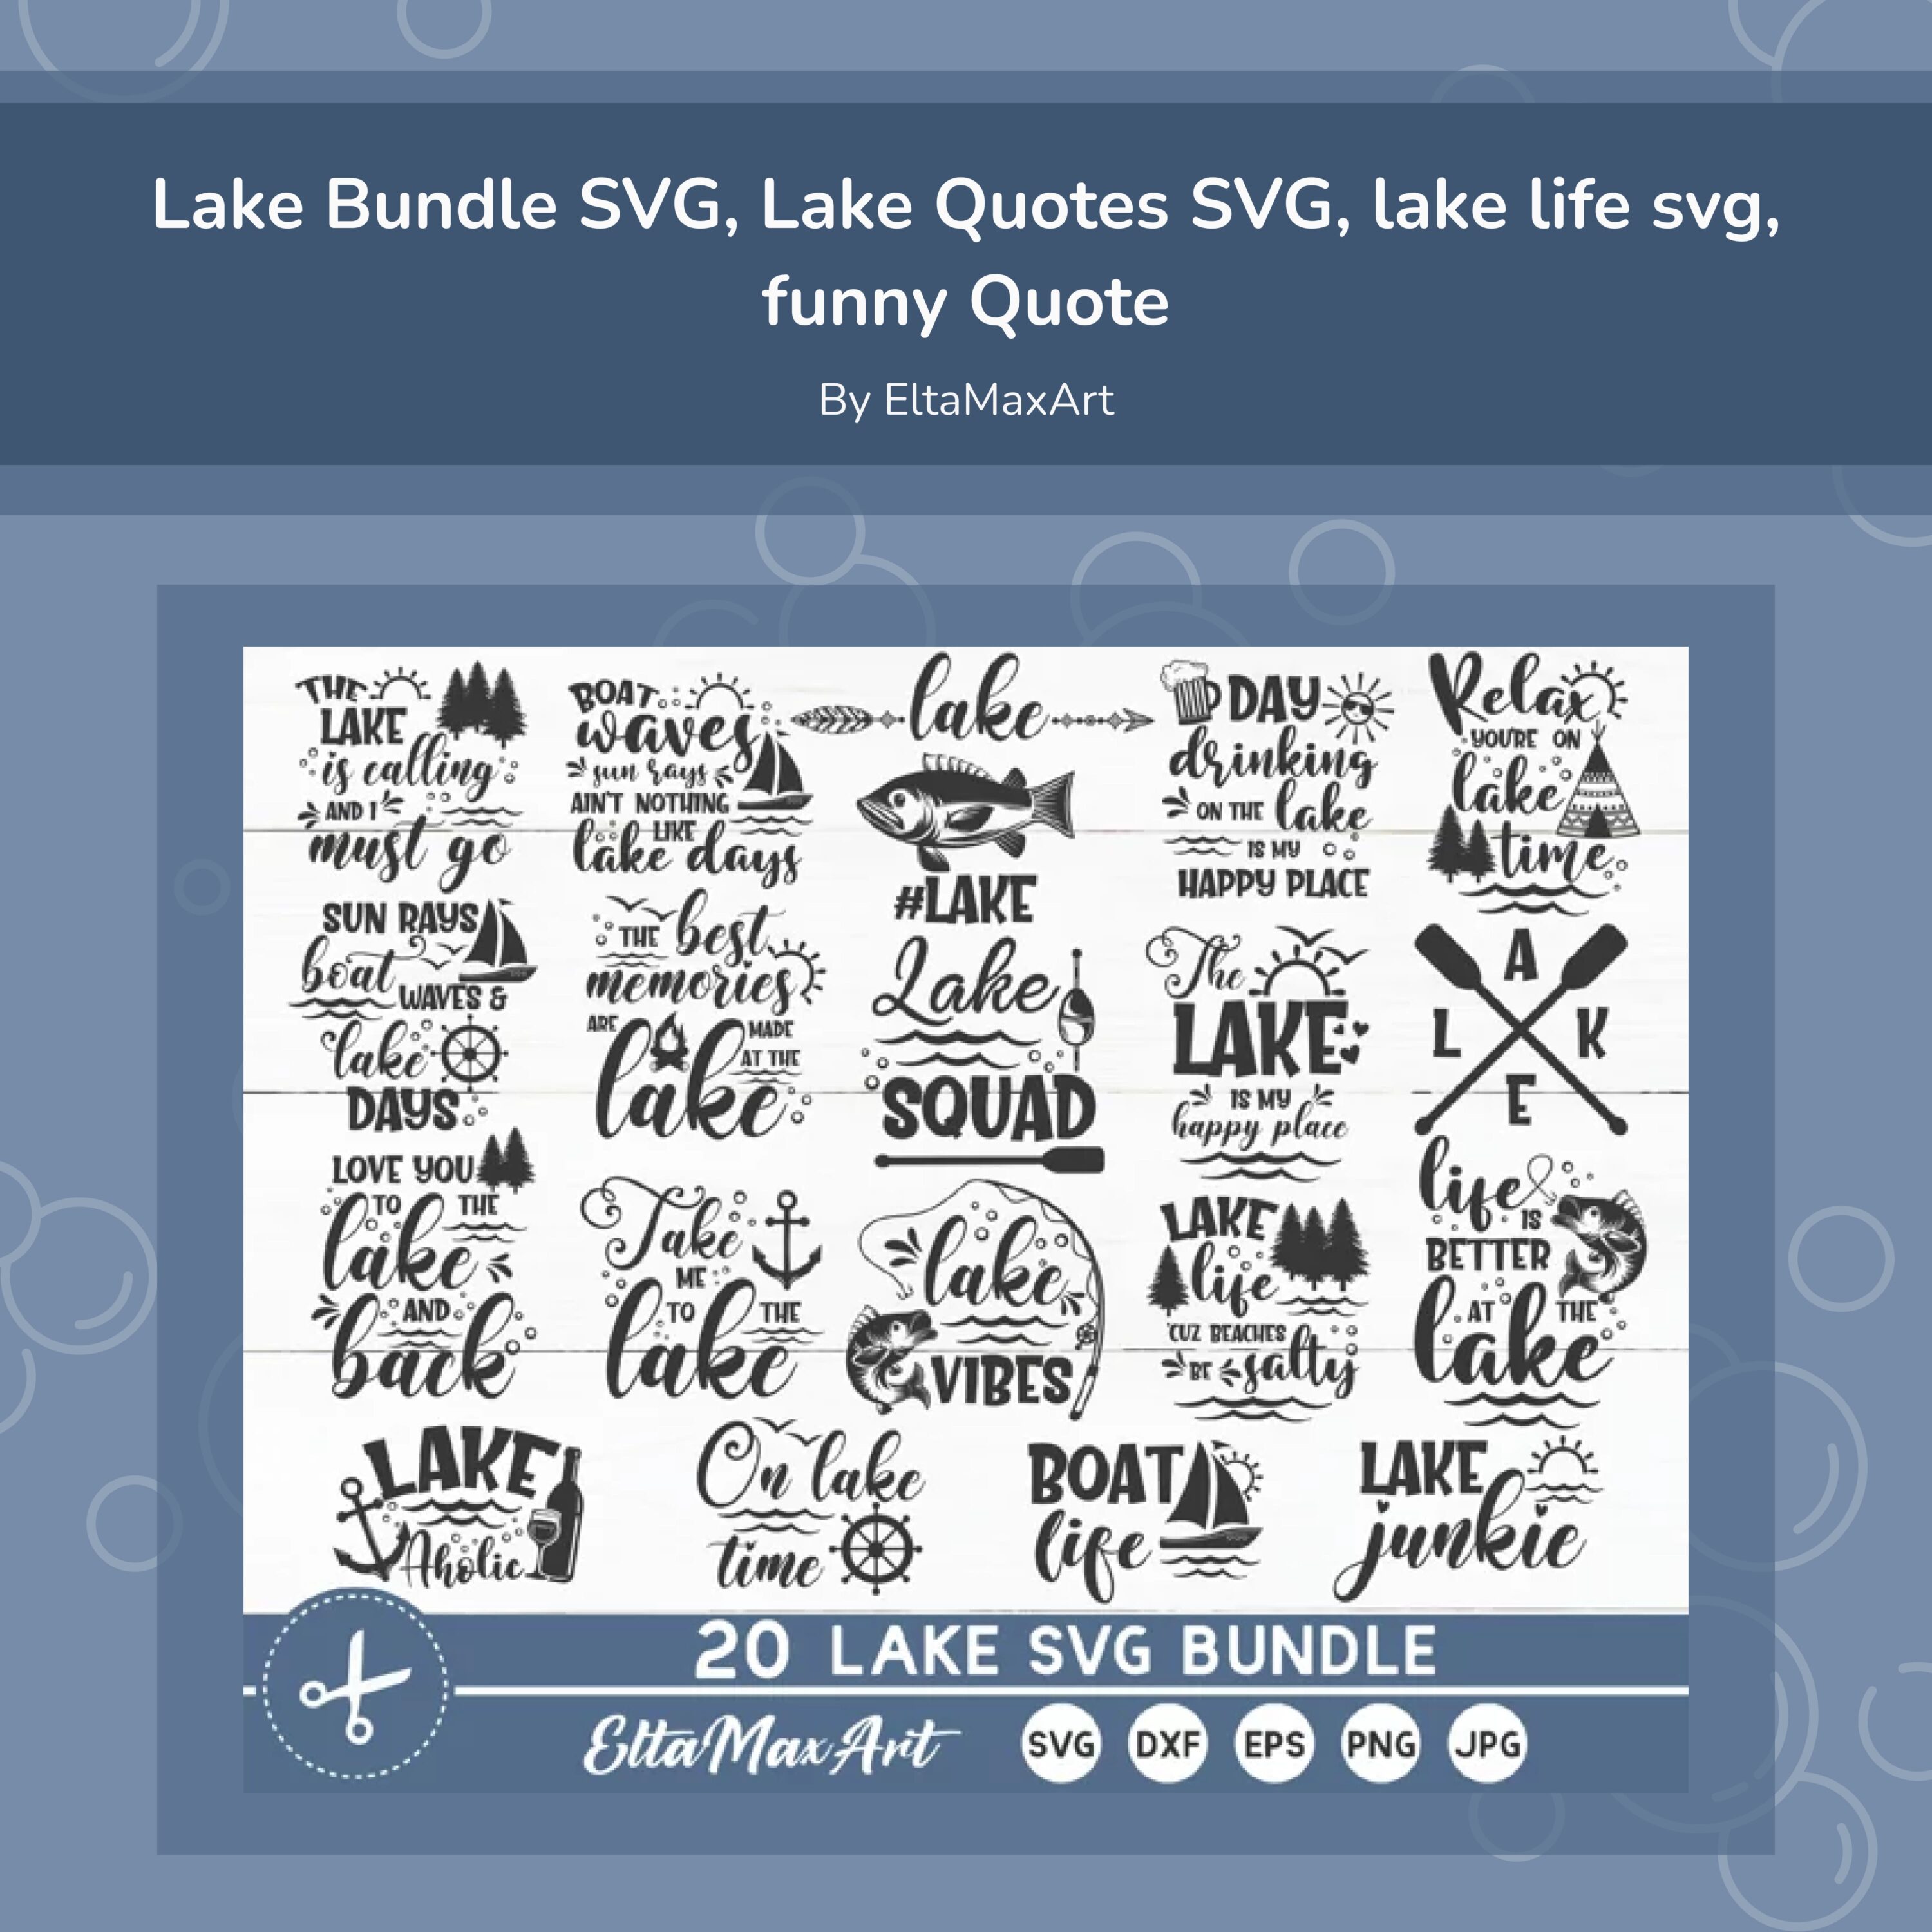 Lake Bundle SVG - main image preview.